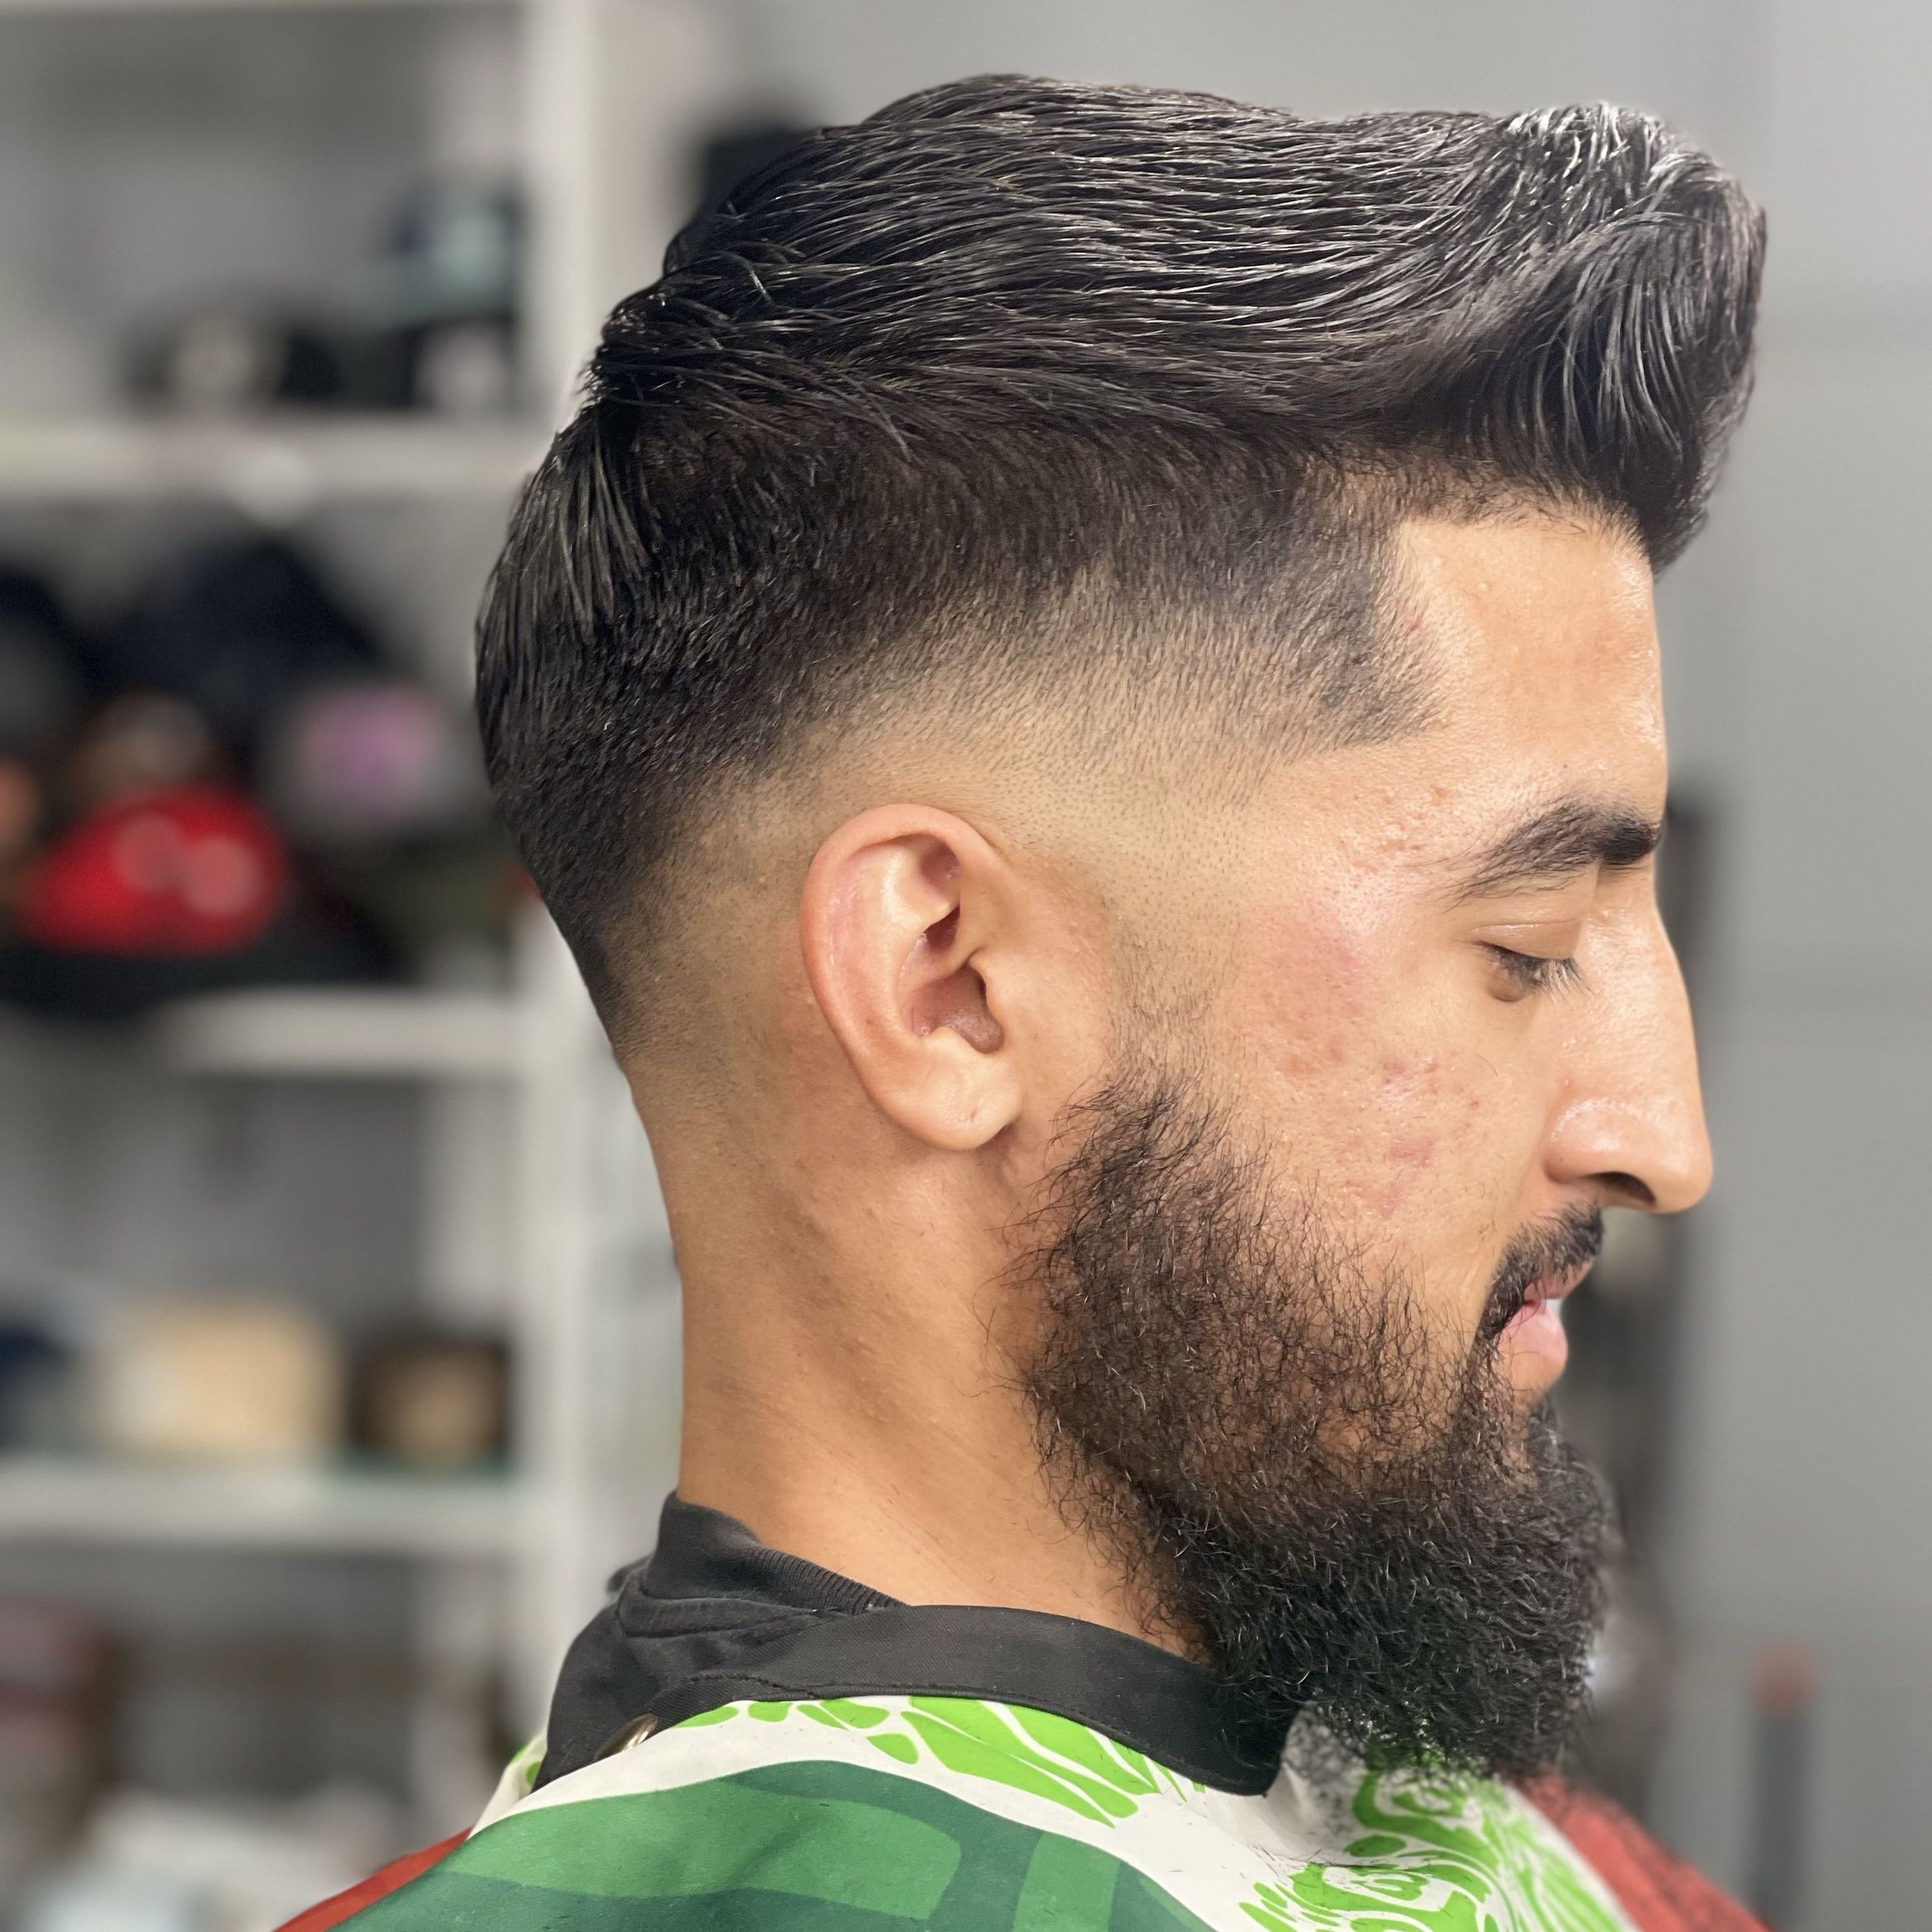 Haircut / beard - Corte / barba portfolio